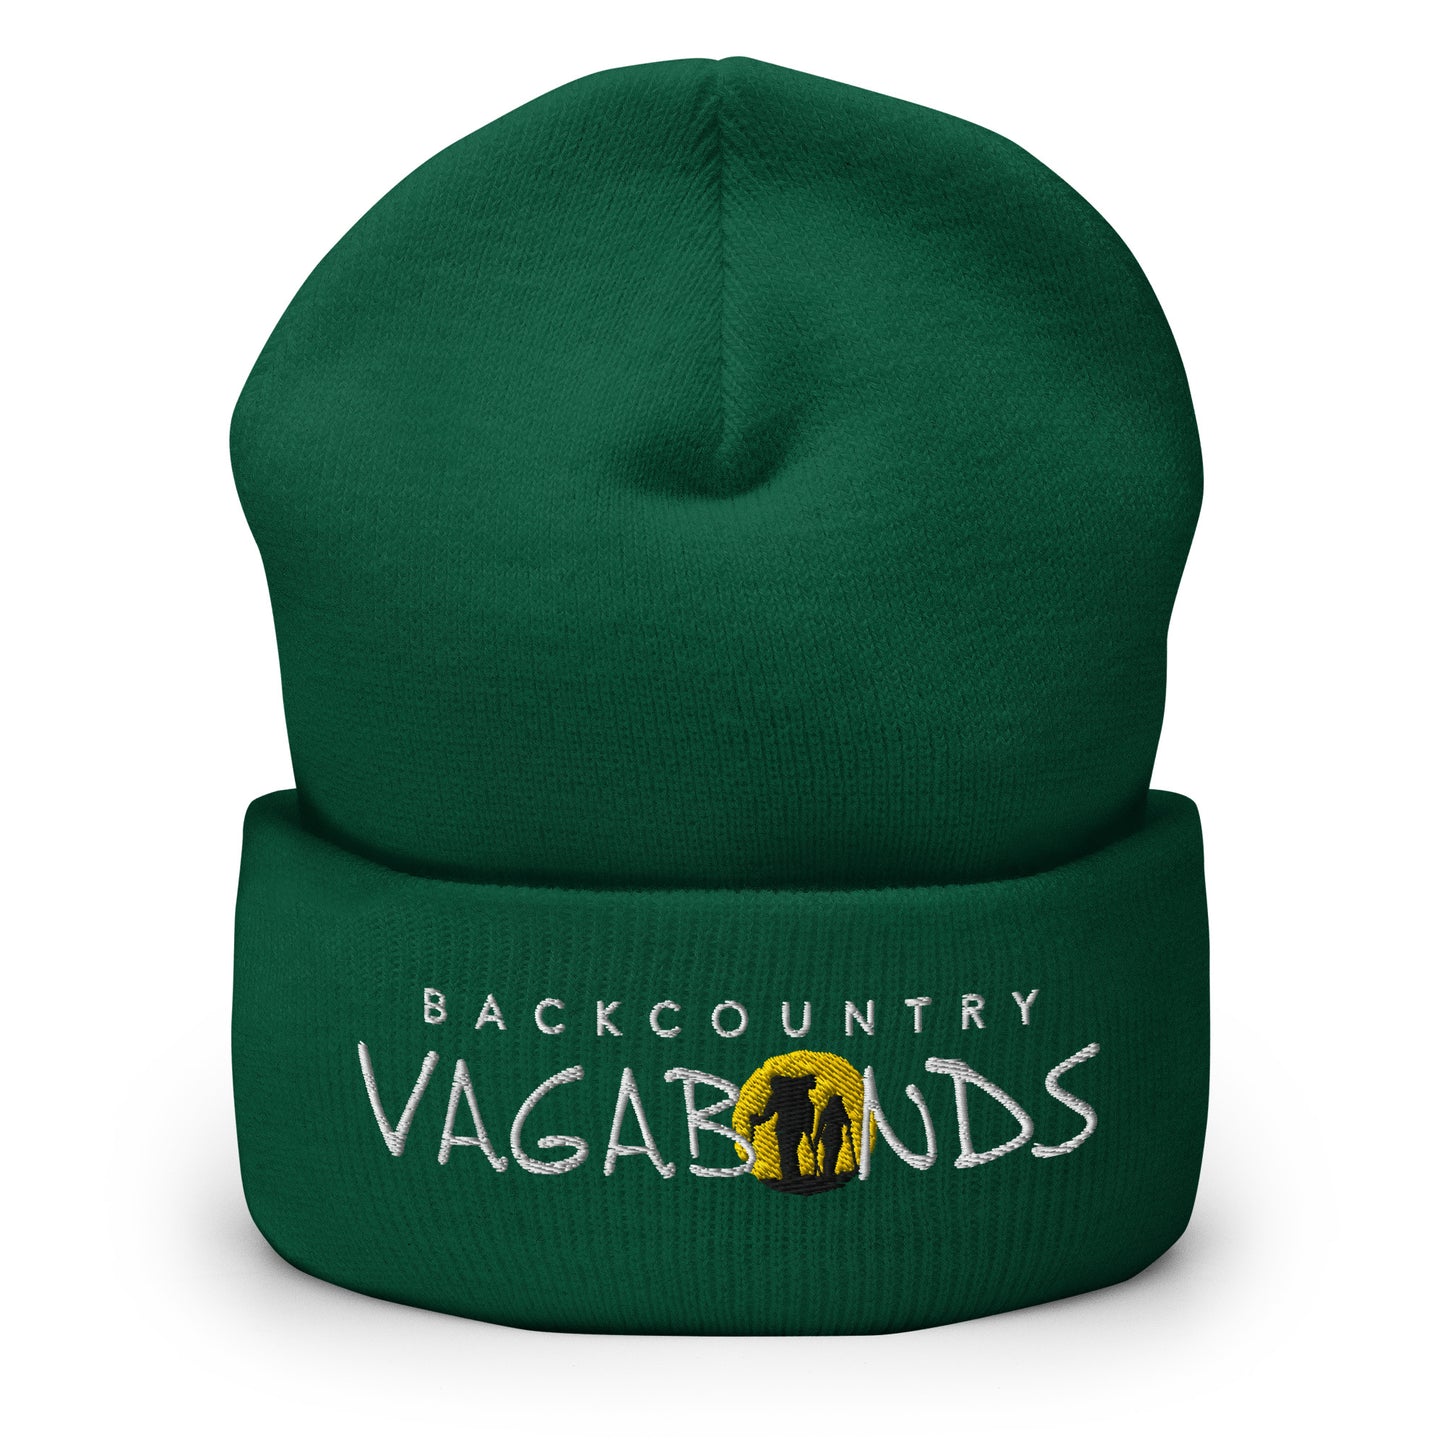 Backcountry Vagabonds Cuffed Beanie